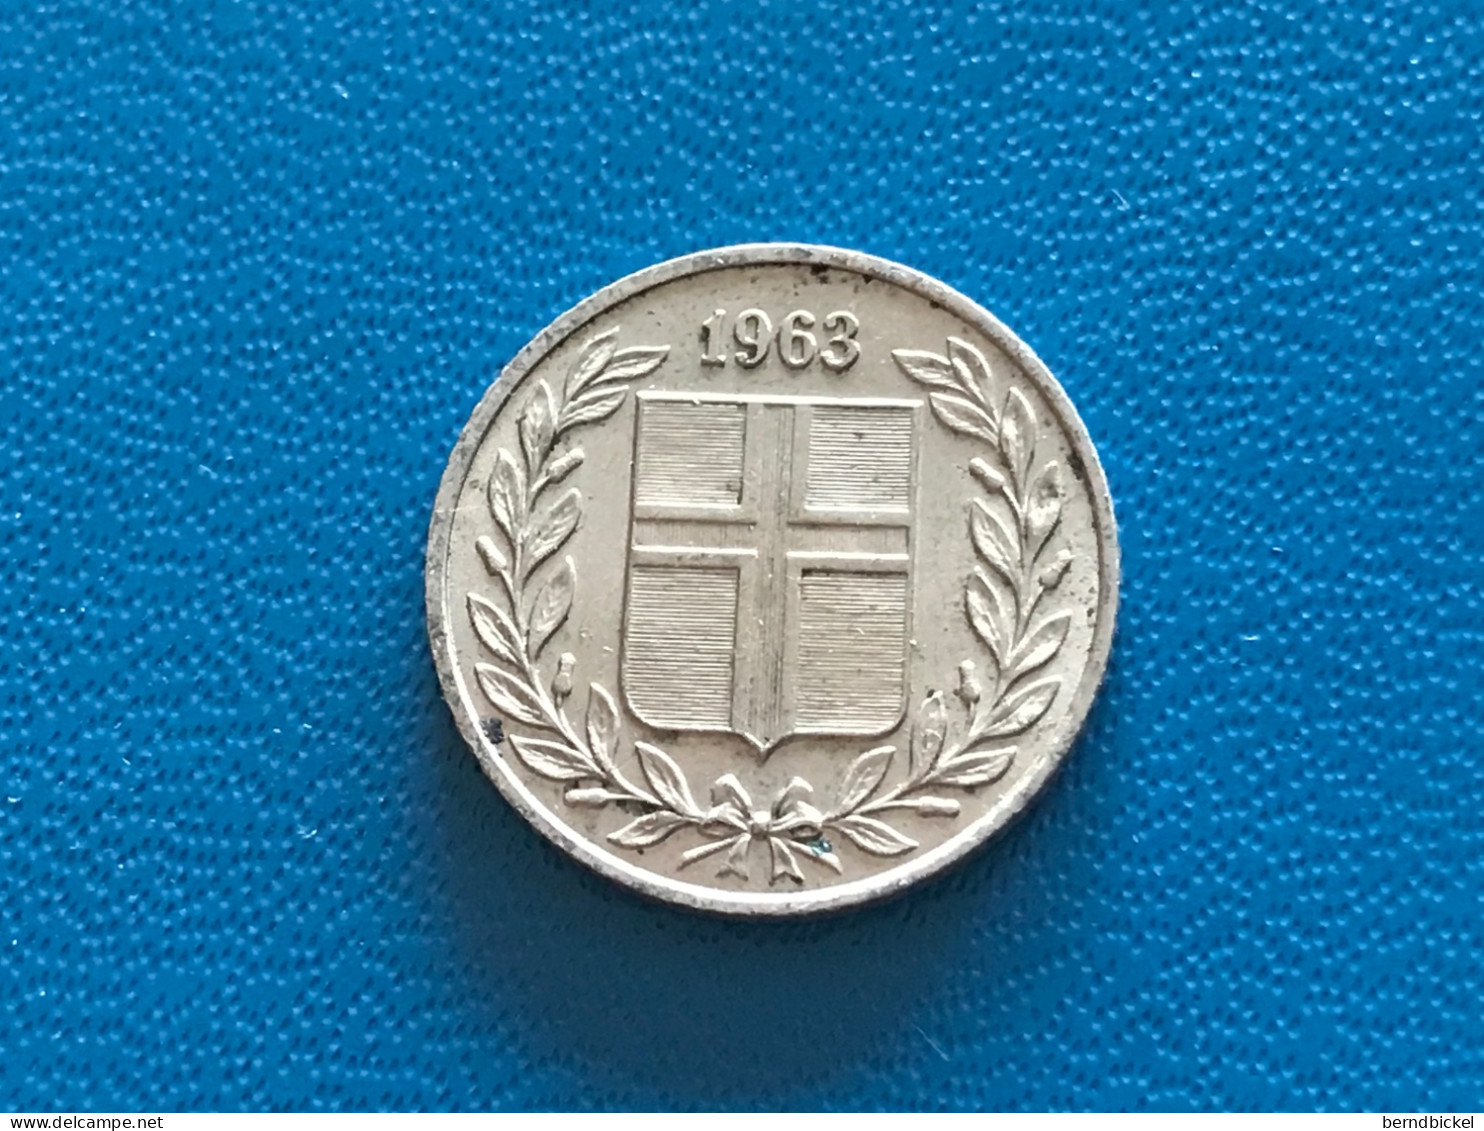 Münzen Münze Umlaufmünze Island 25 Aurar 1963 - Island